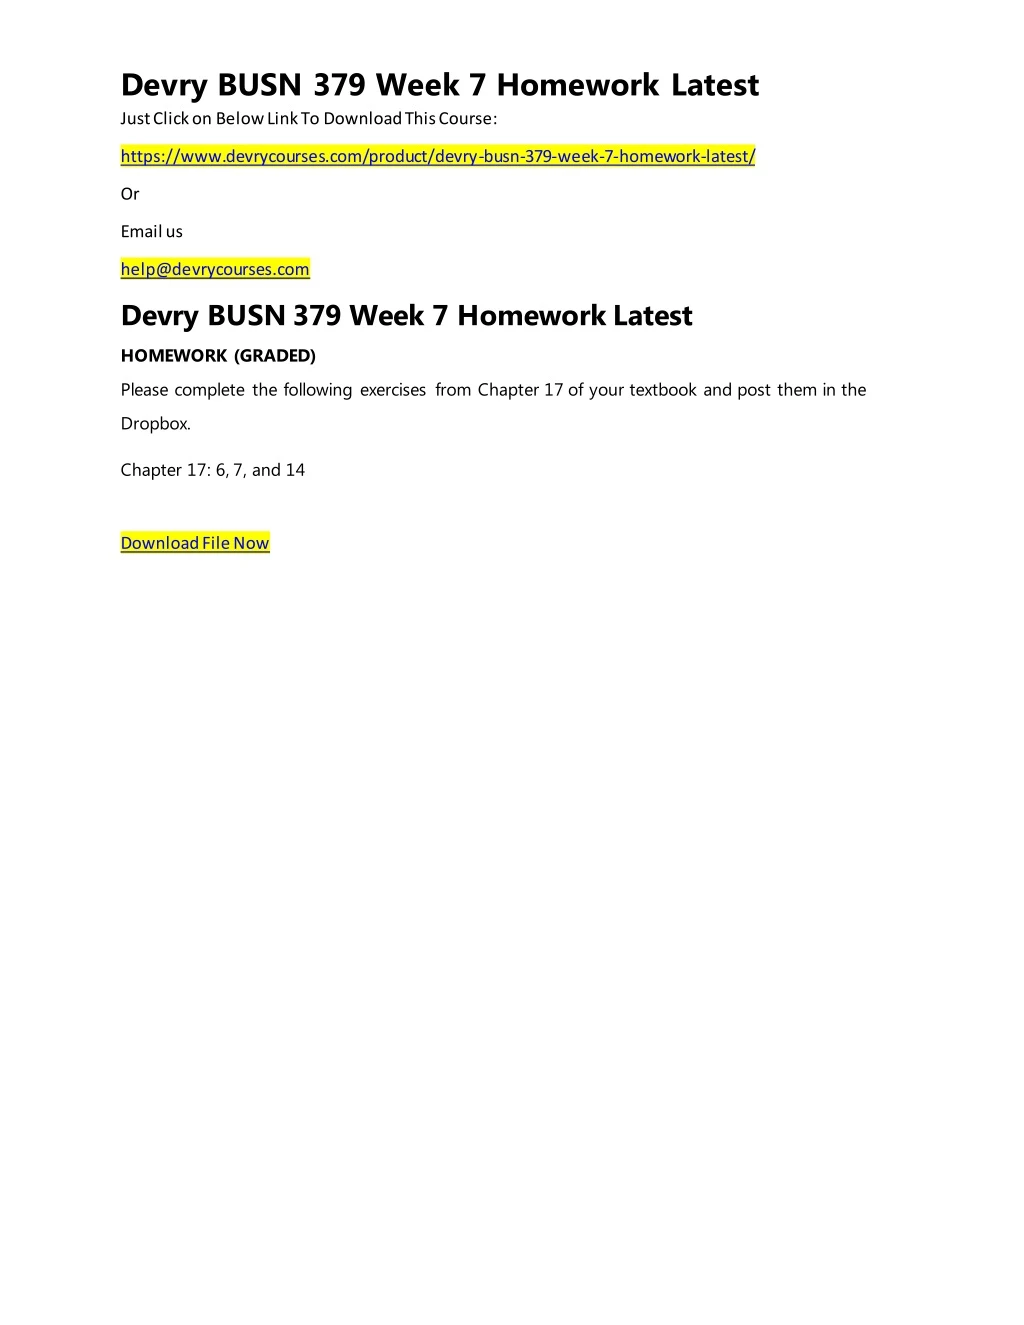 devry busn 379 week 7 homework latest just click